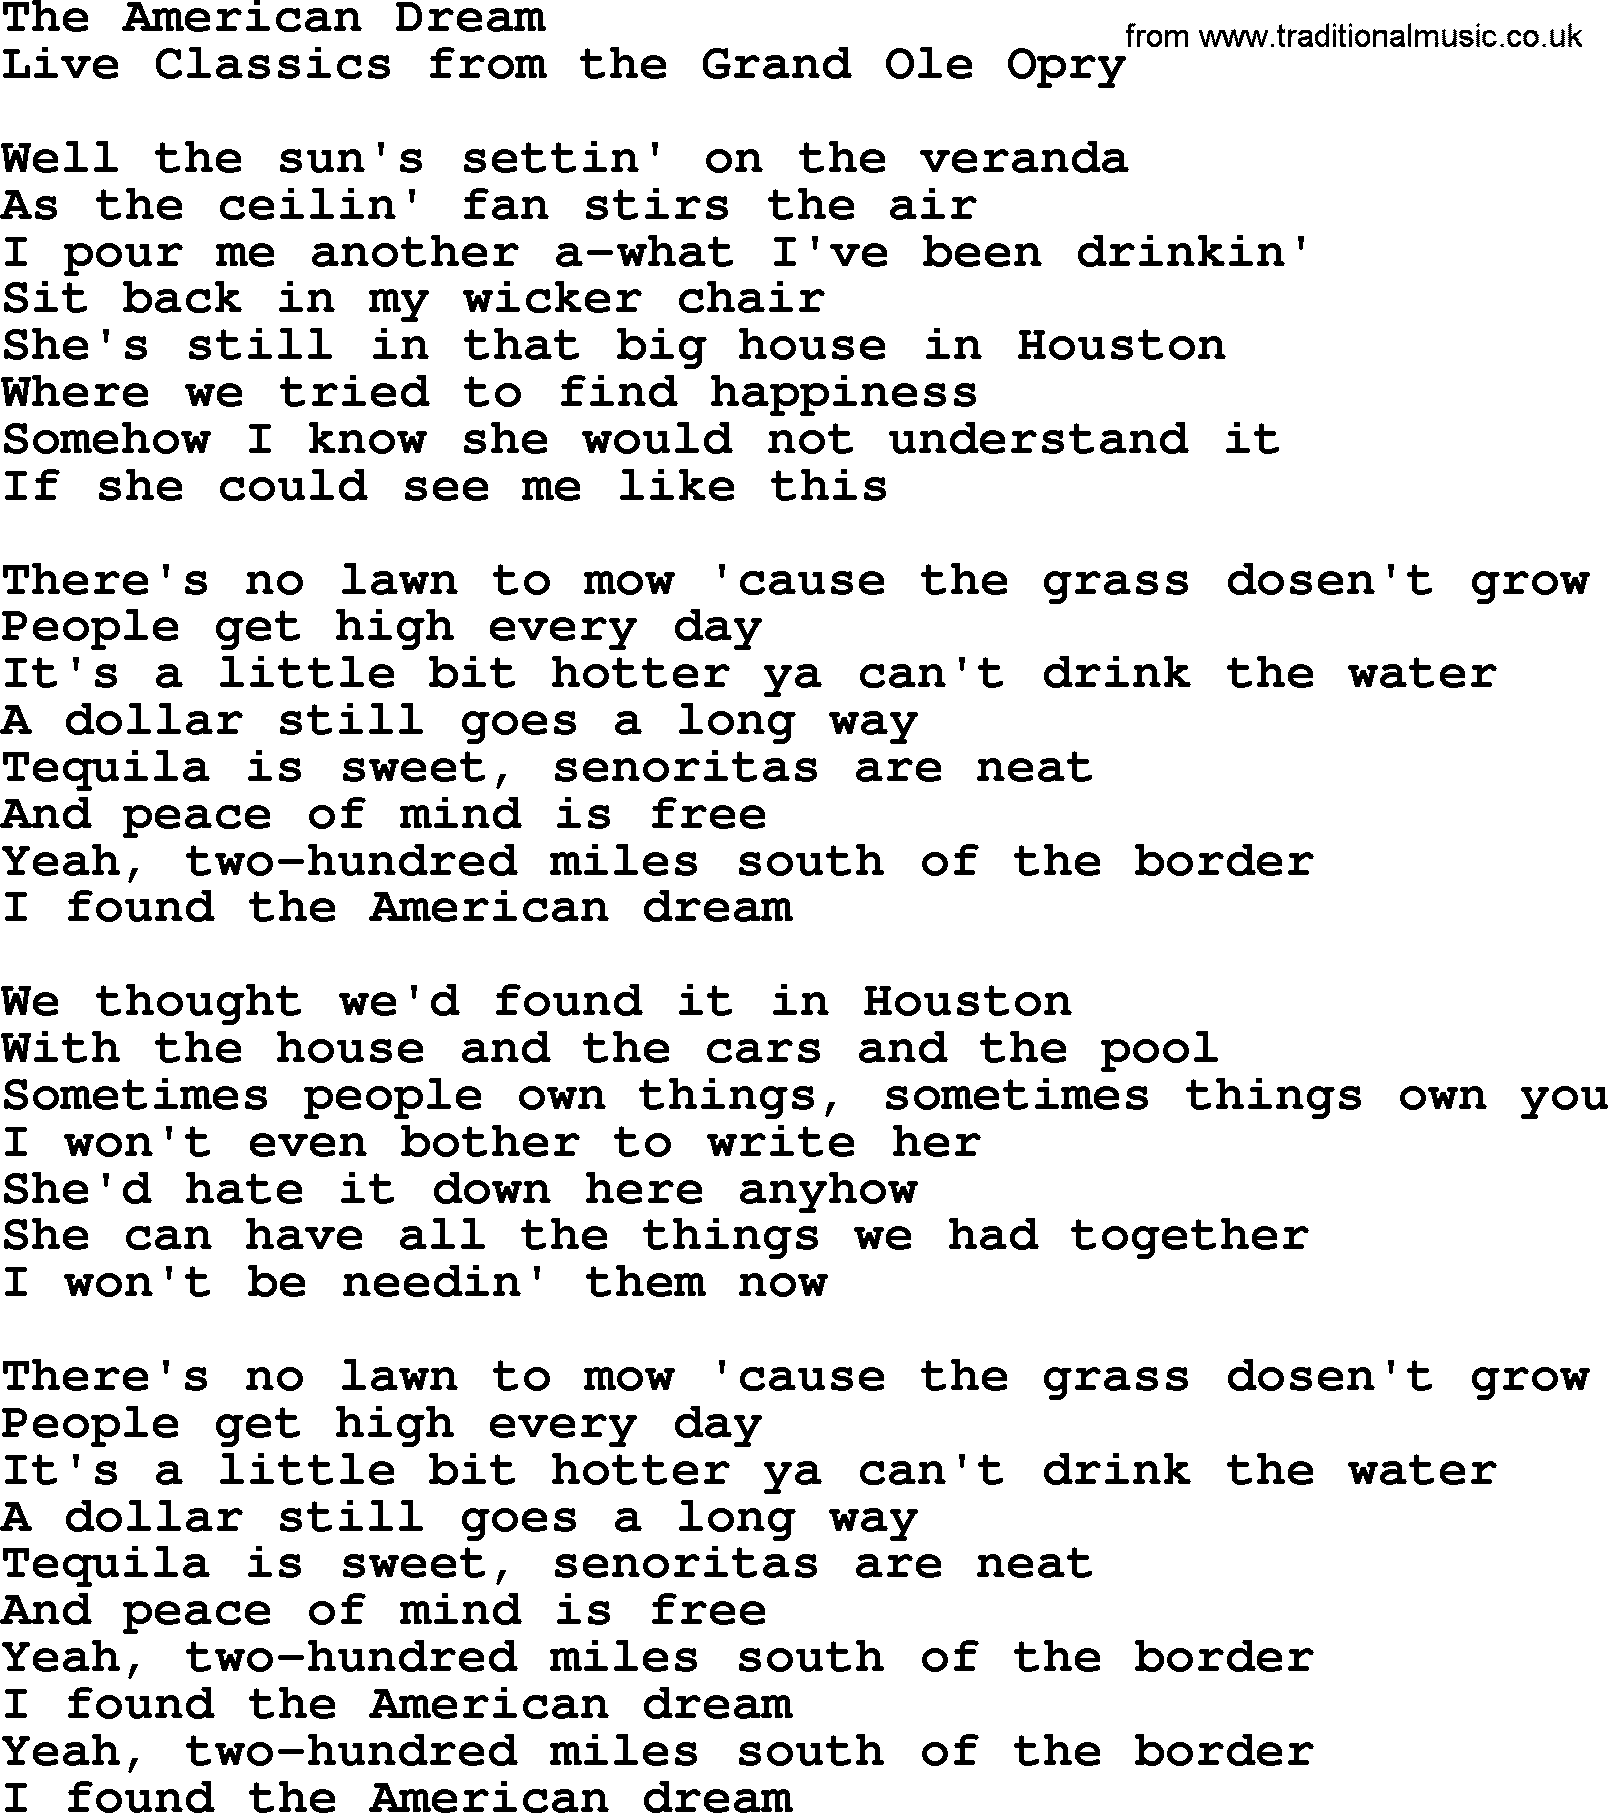 Marty Robbins song: The American Dream, lyrics